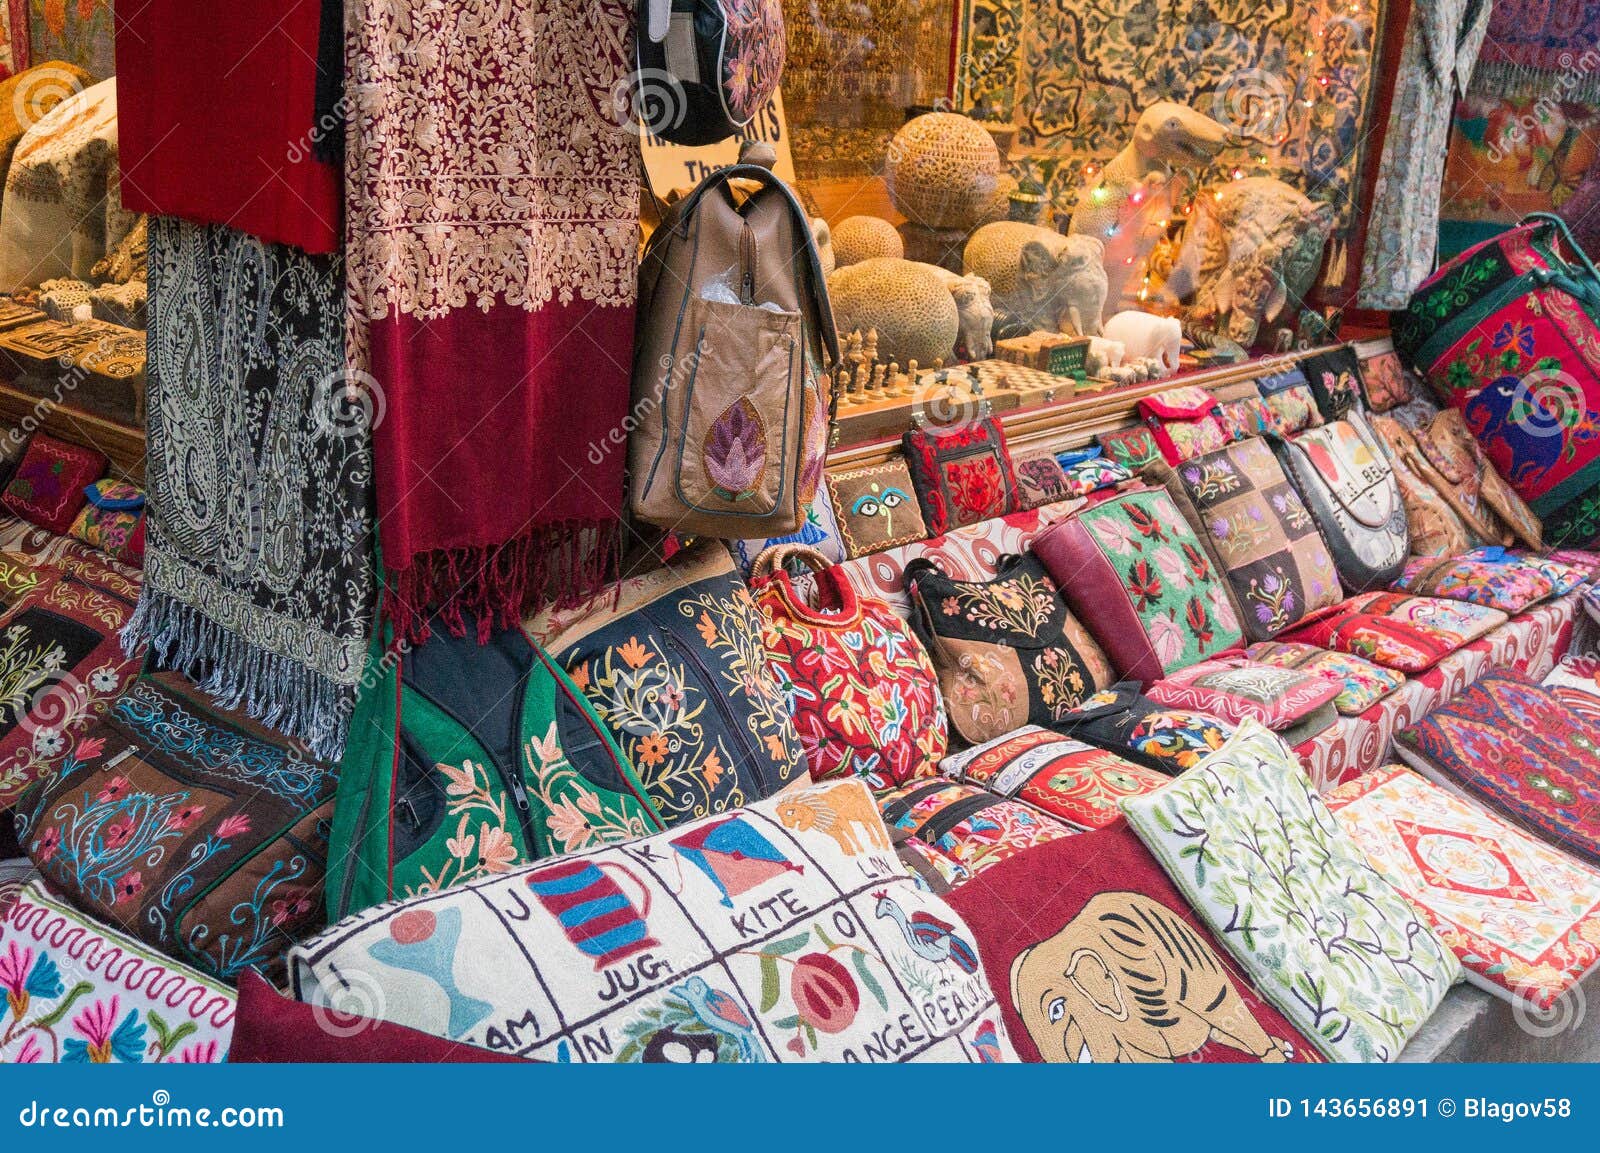 colorful pashmina shawls and handbags. local art and craft